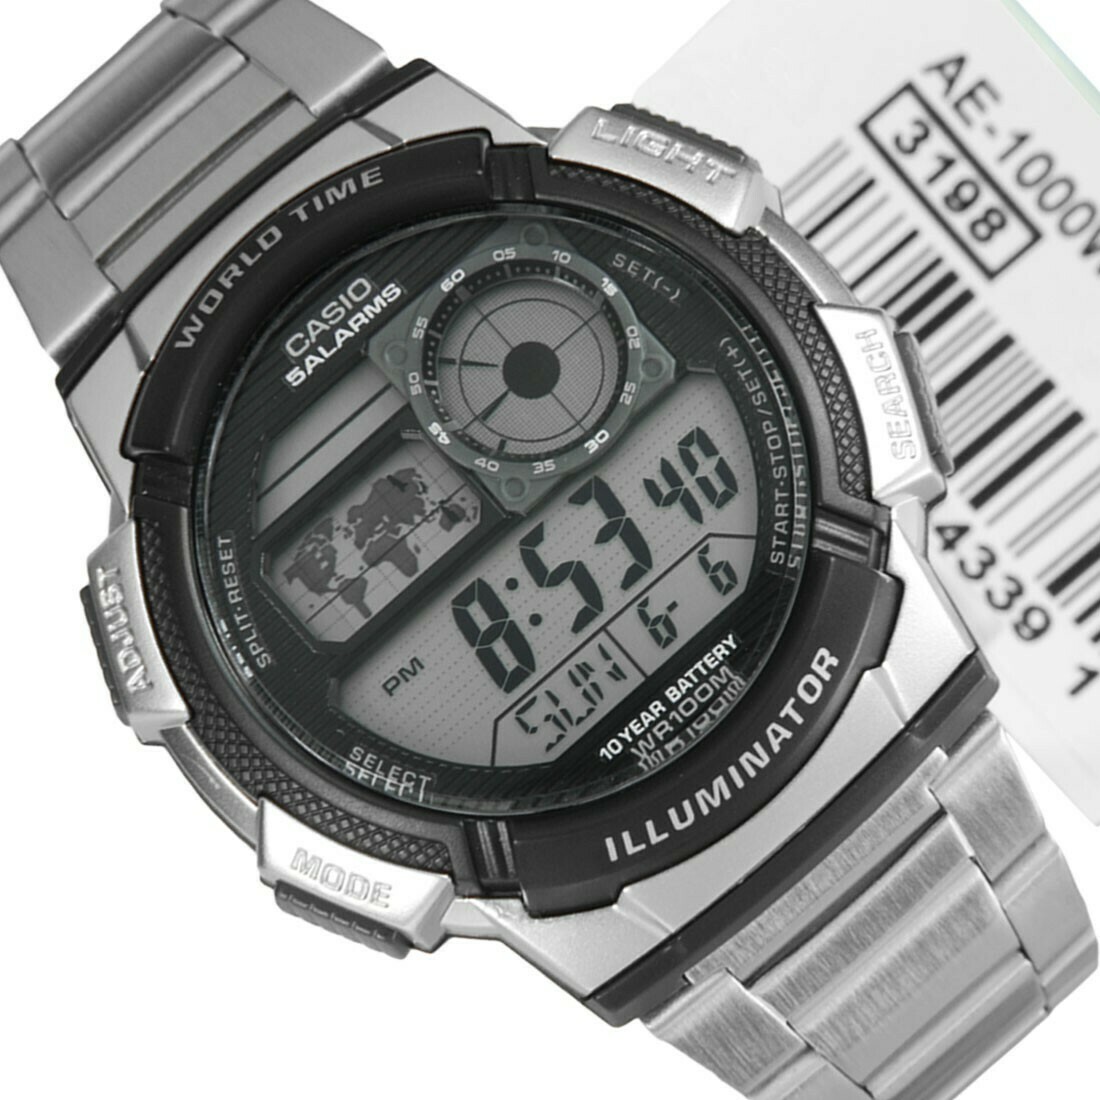 Reloj digital CASIO AE-1000WD-1AV 5 alarmas water resist 100m